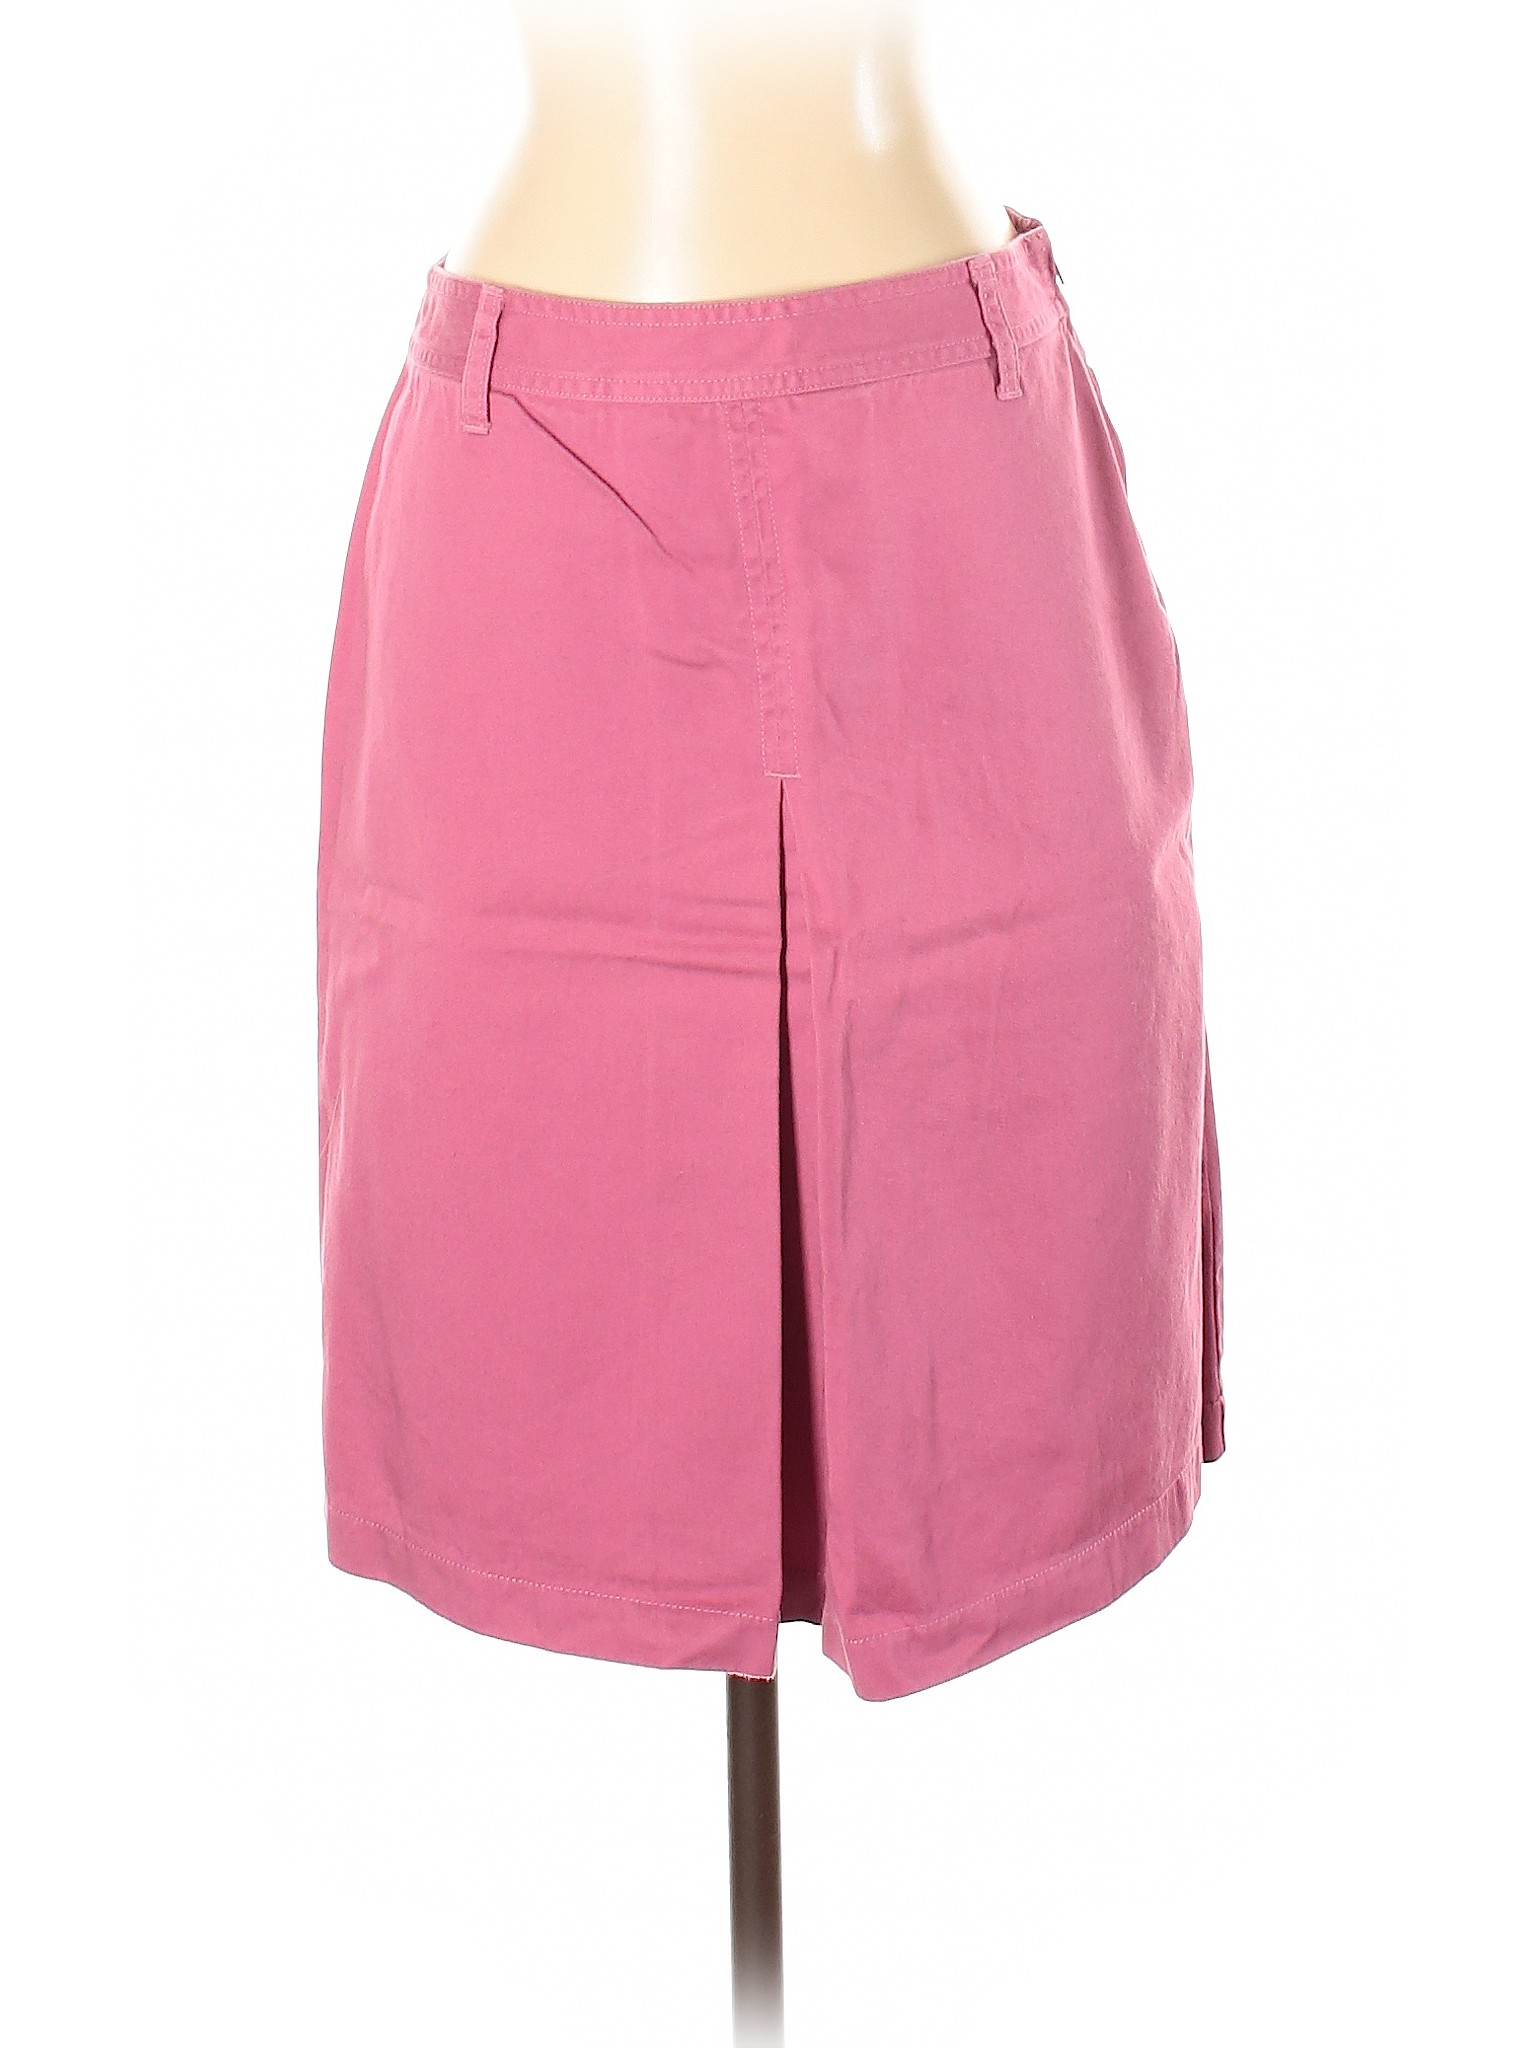 J.Crew Women Pink Casual Skirt 2 | eBay